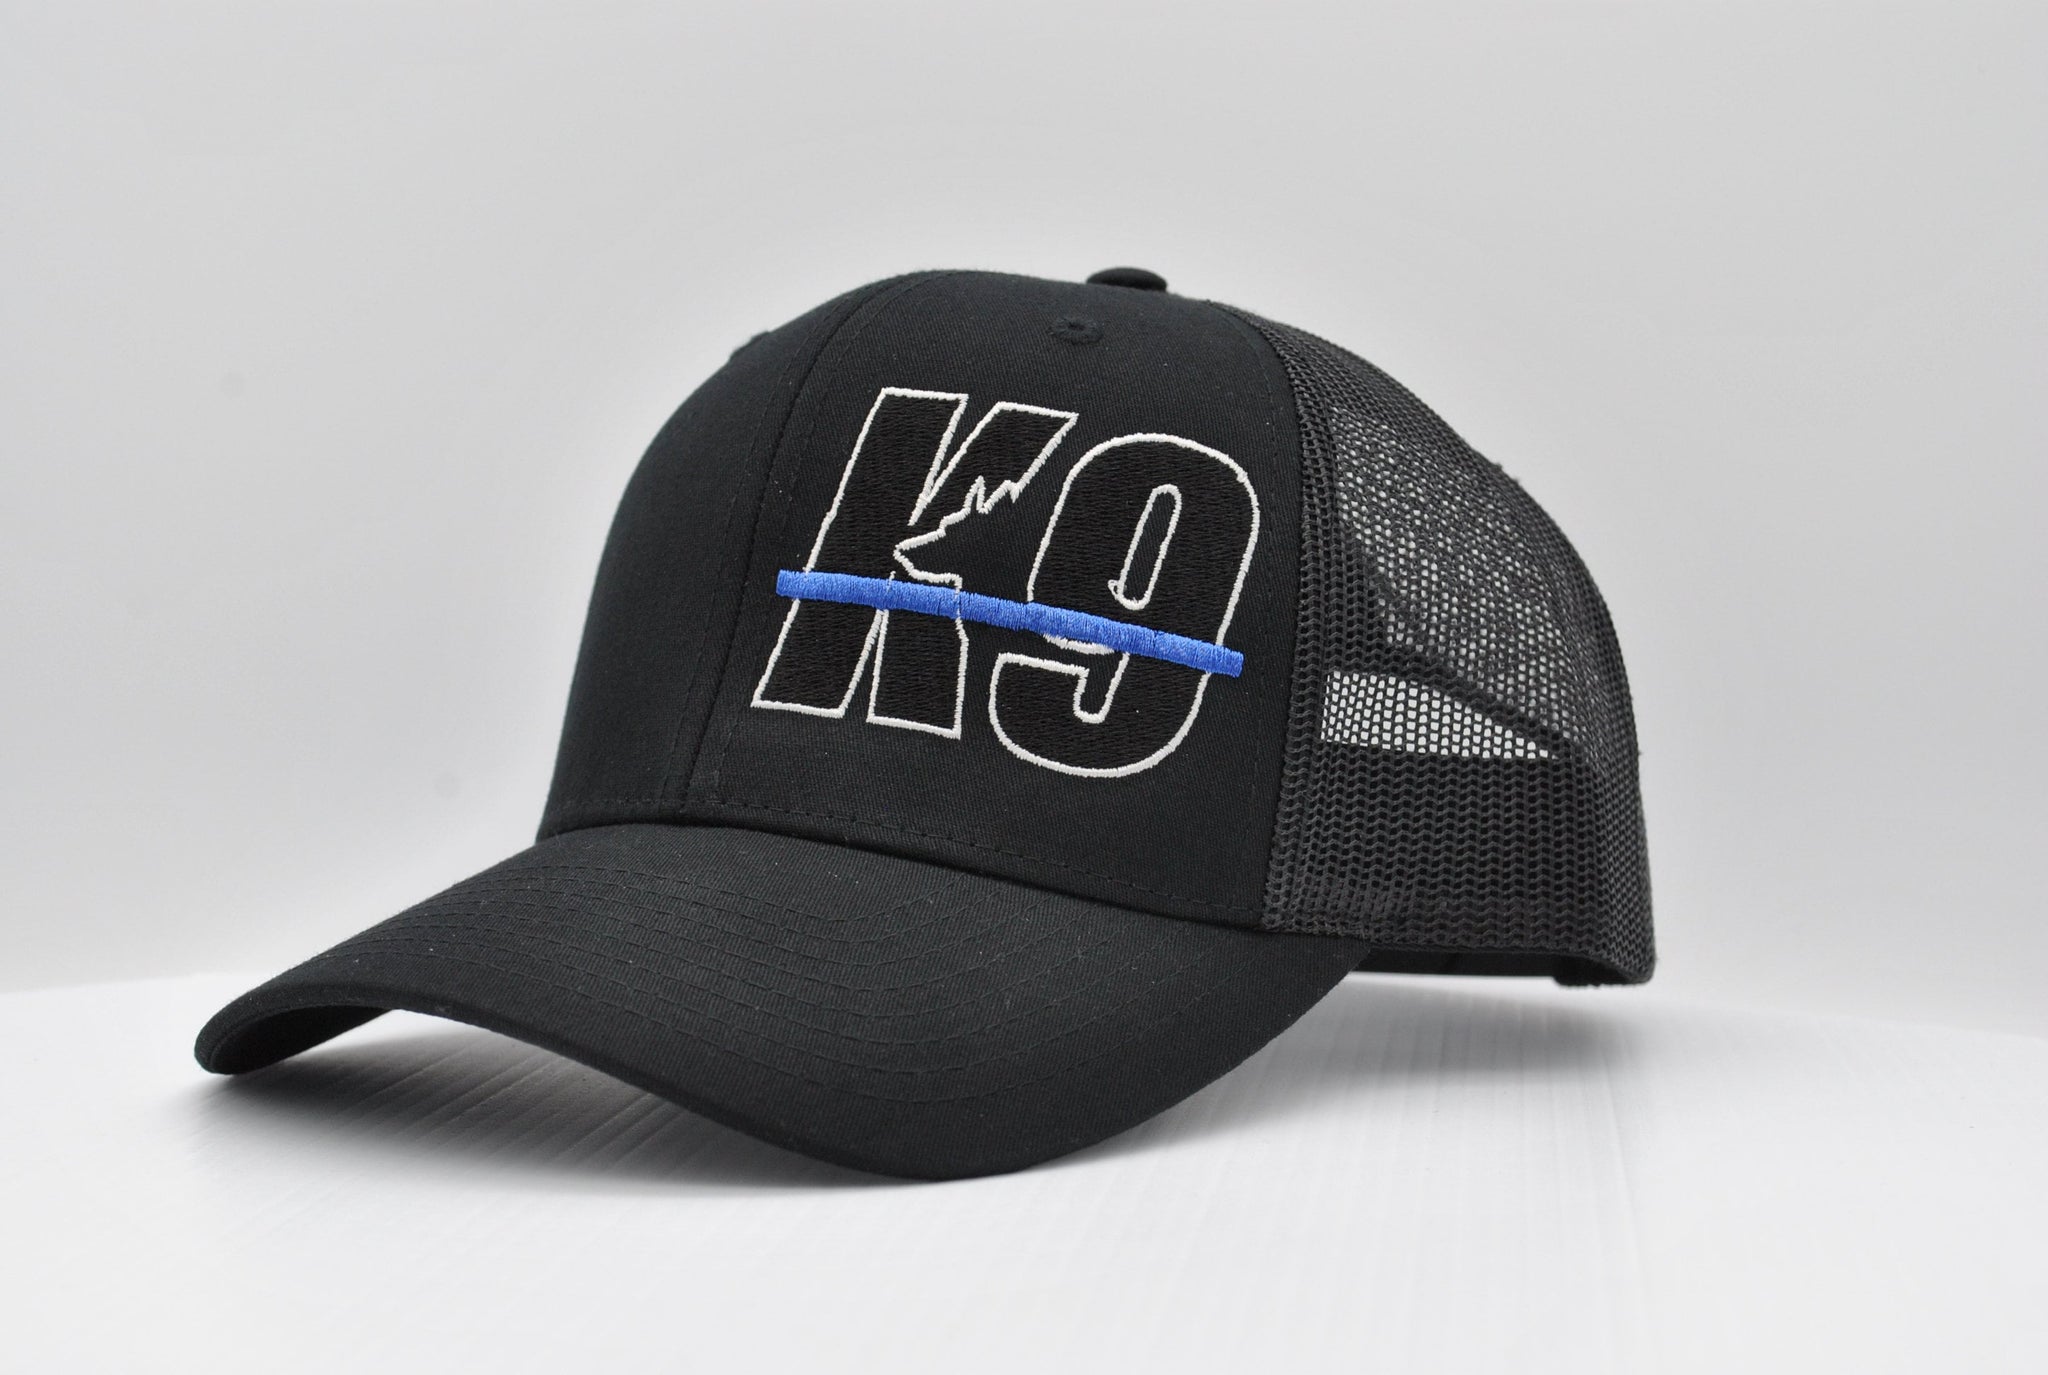 K9 Thin Blue Line  Hats